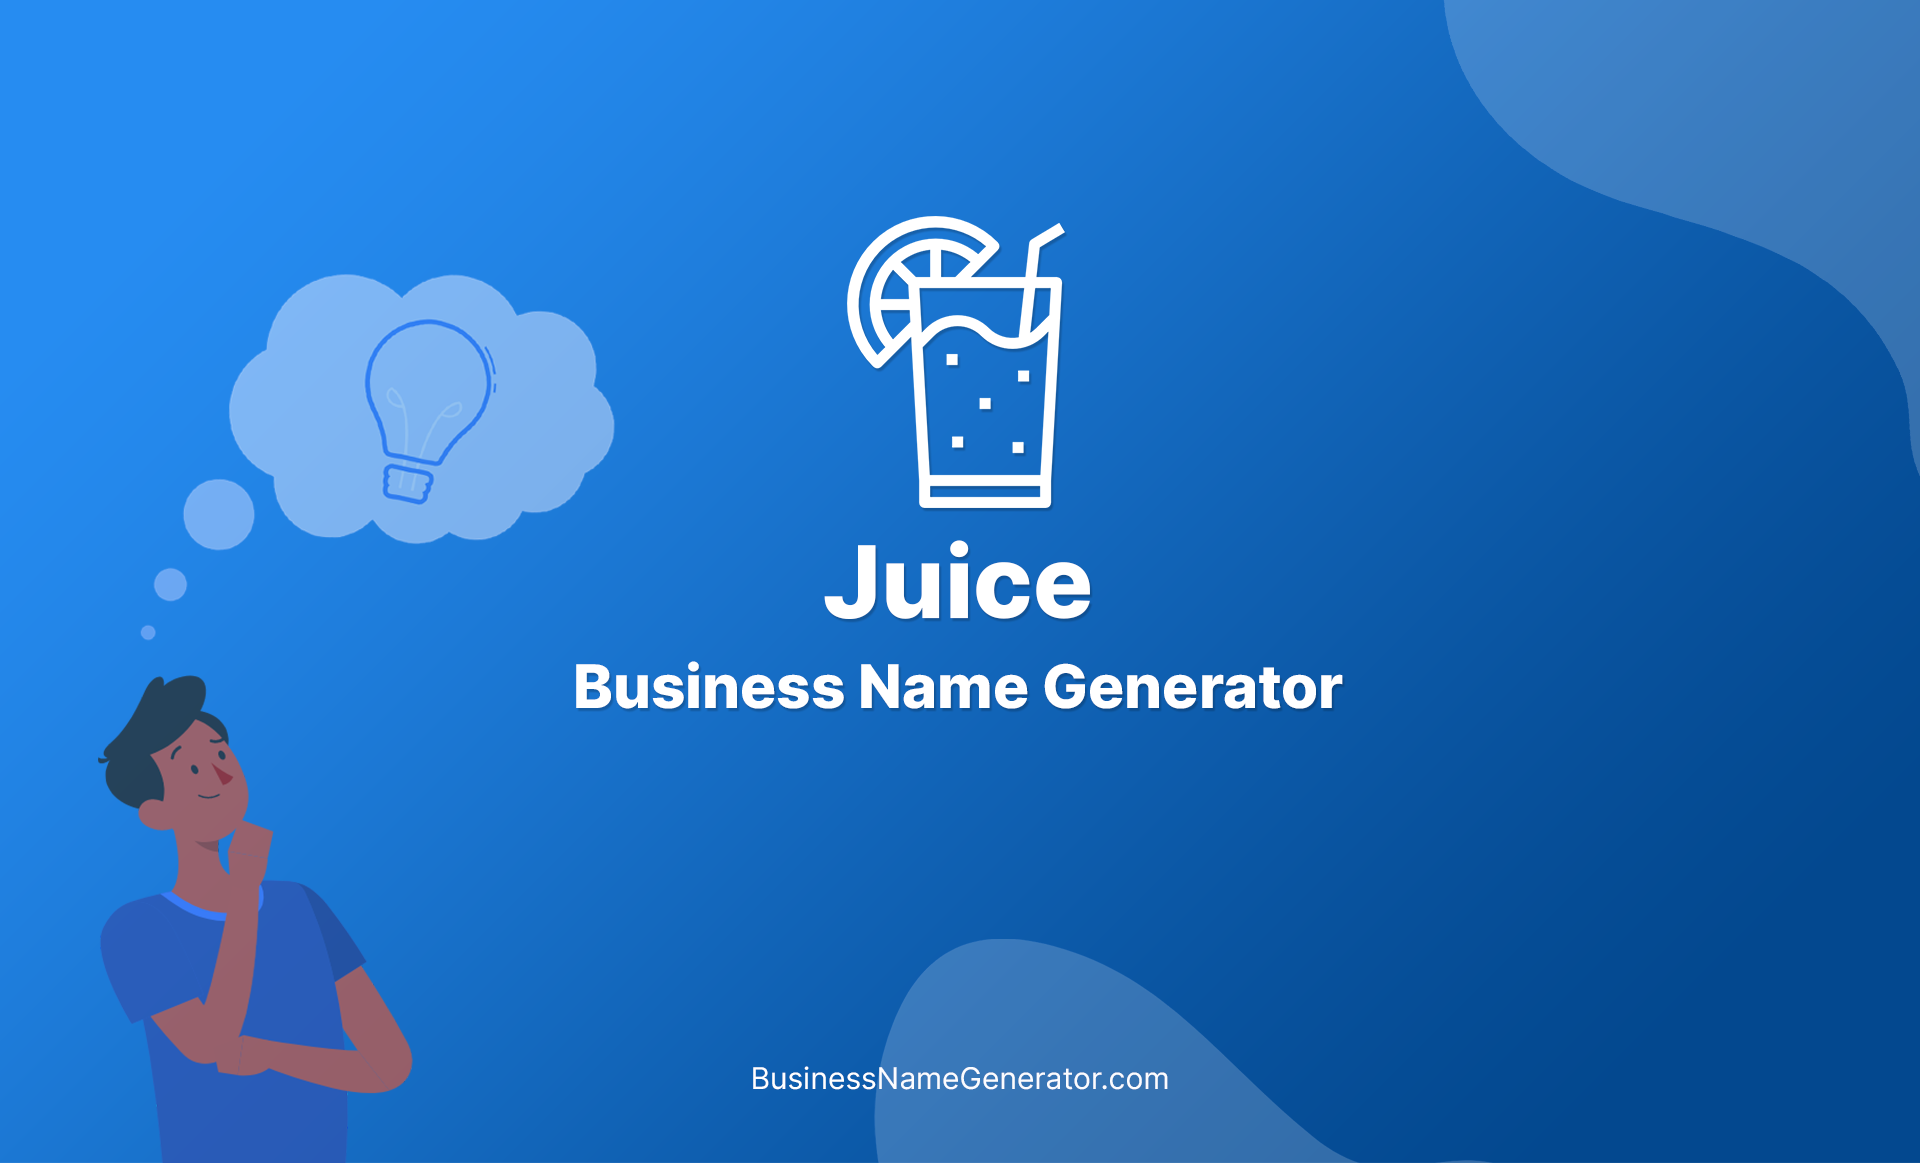 Juice Business Name Generator